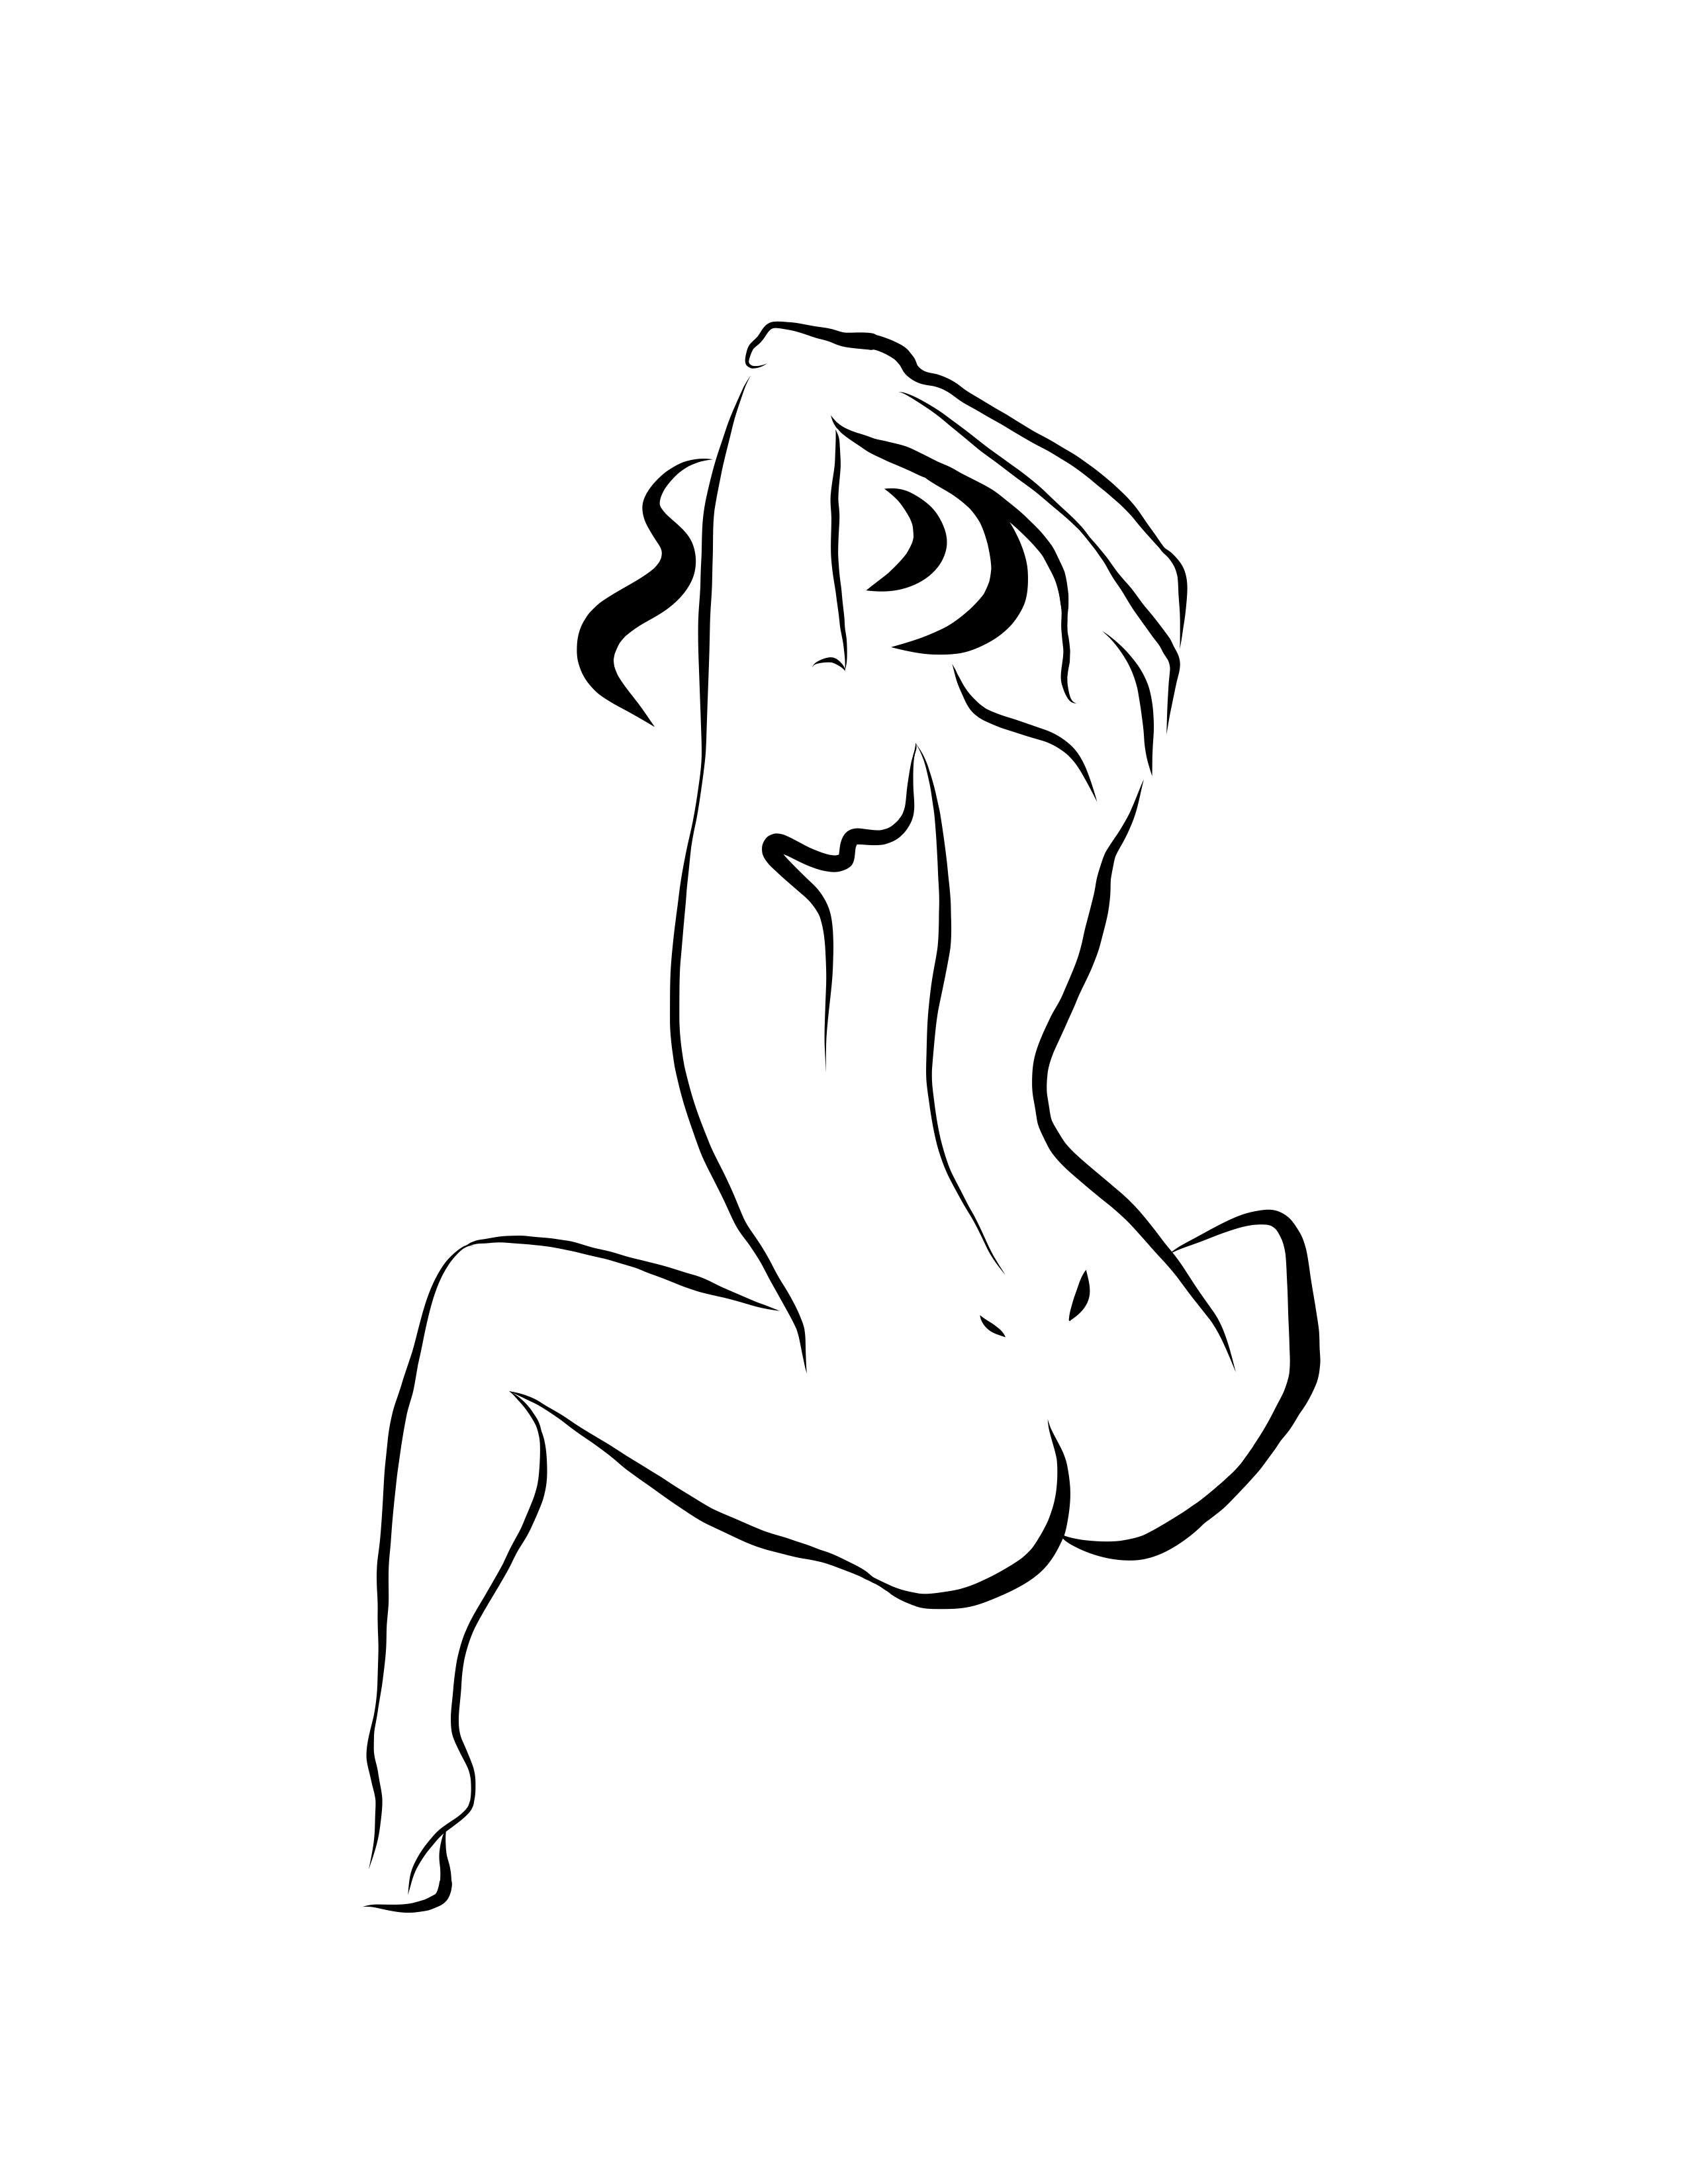 Haiku #13, 1/50 - Digital Vector Drawing Seated Female Nude Woman Figure